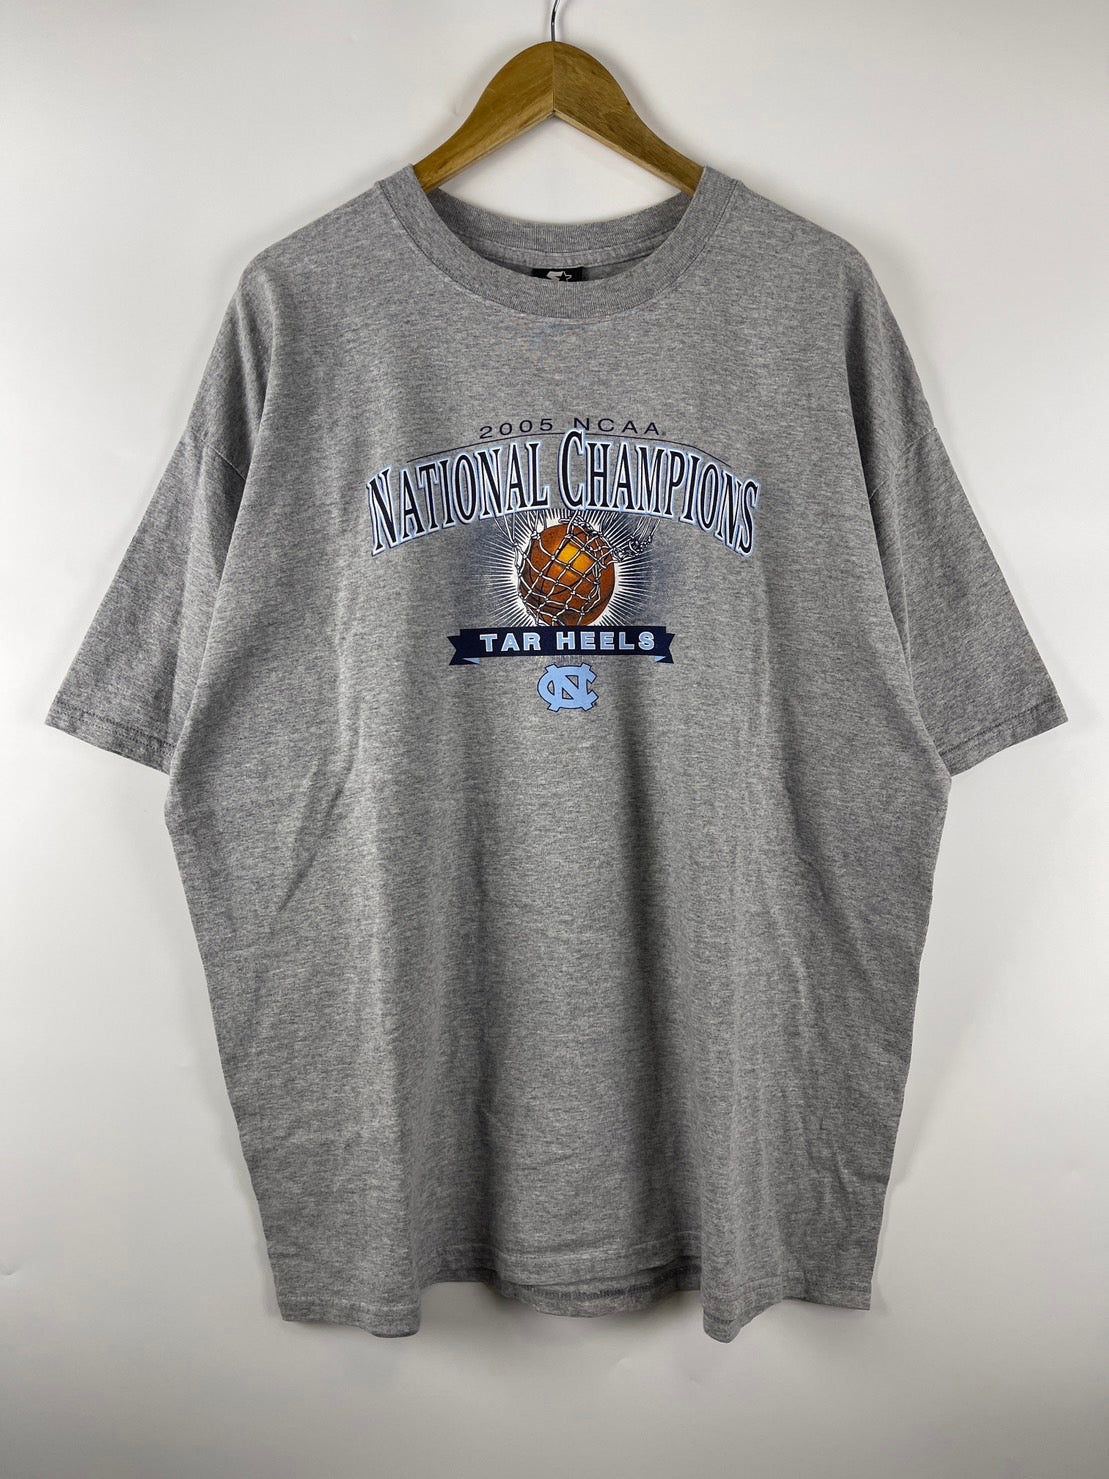 Vintage University Of North Carolina "Basketball Team Champions NCAA 2005" Tshirt